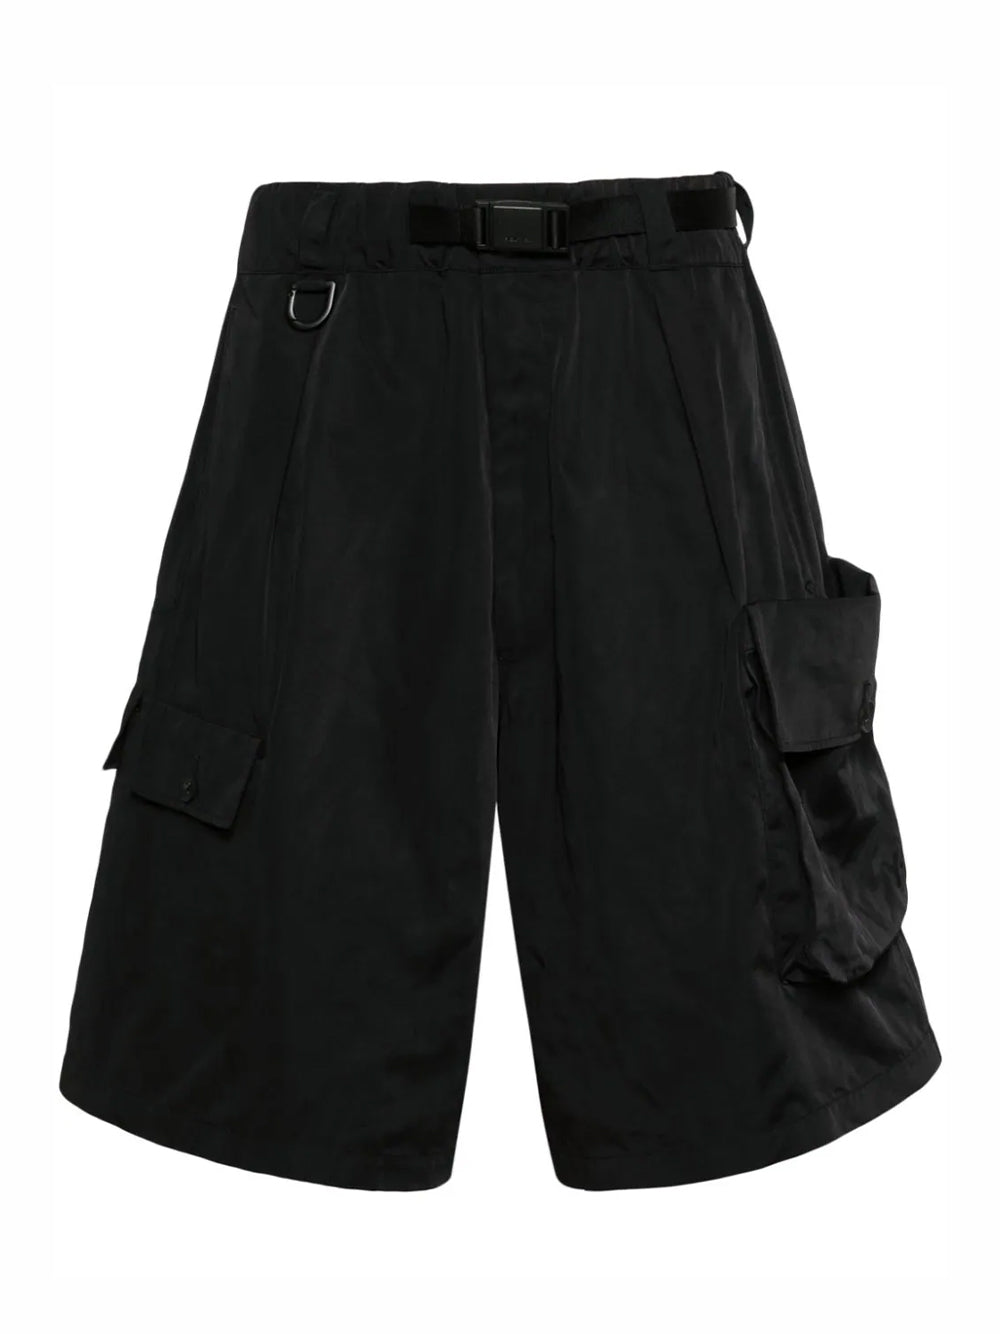 Nylon Twill Shorts (Black)